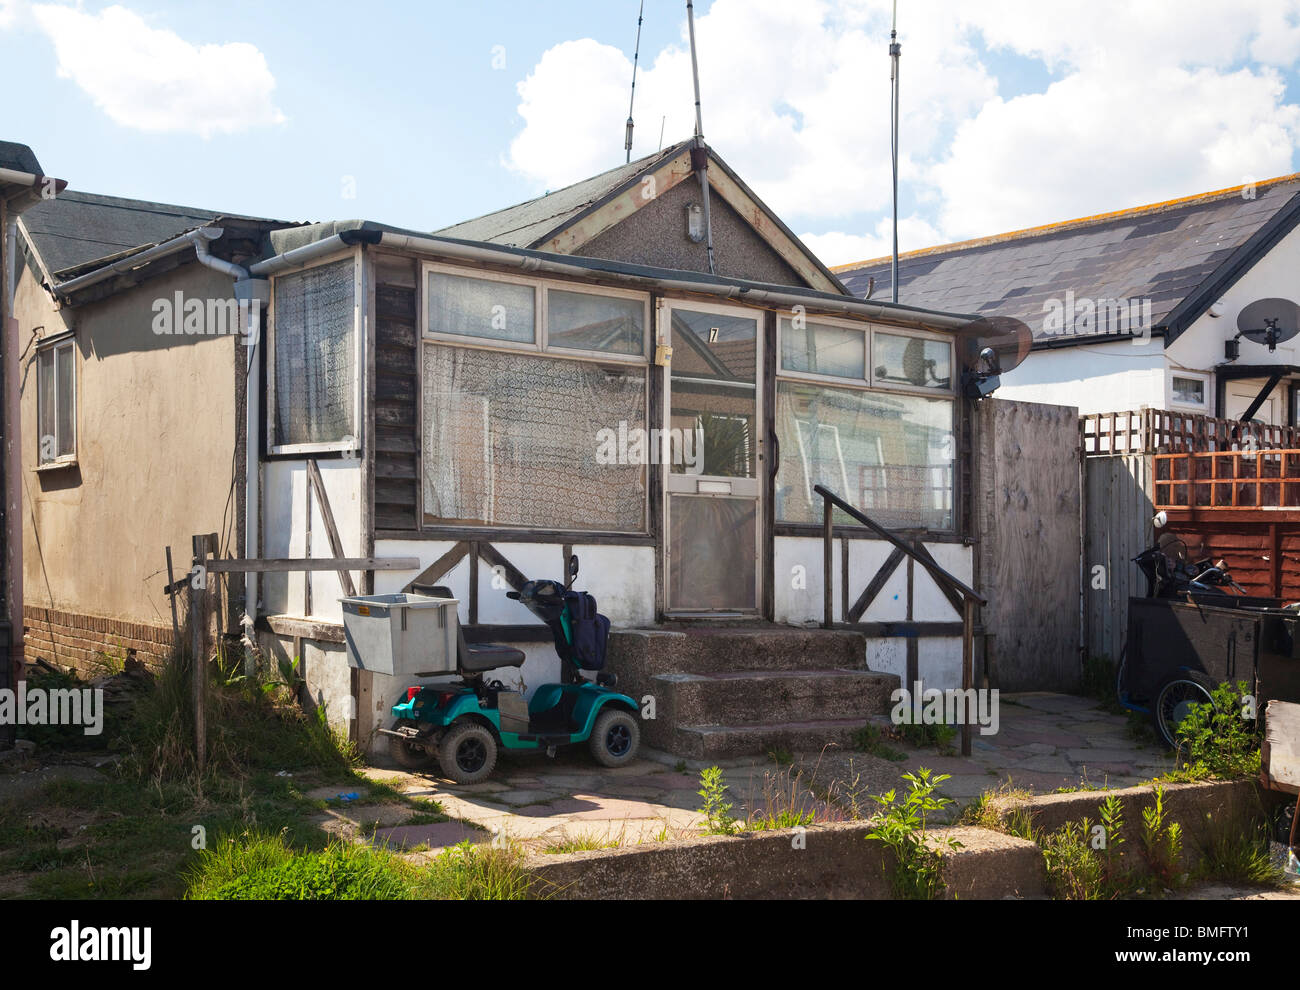 homes in Jaywick Sands in Essex, UK Stock Photo